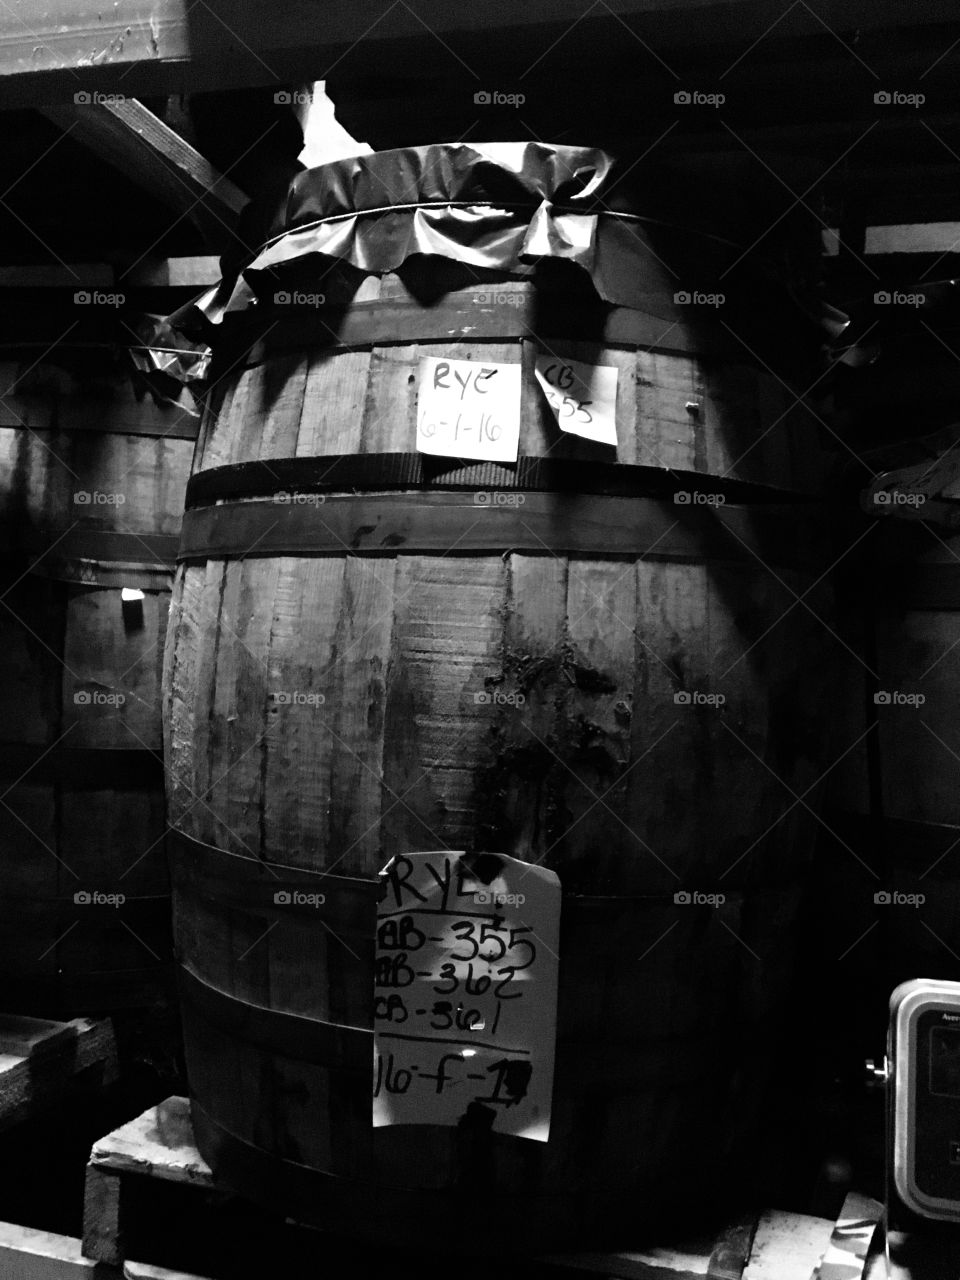 Rye whisky barrel almost ready